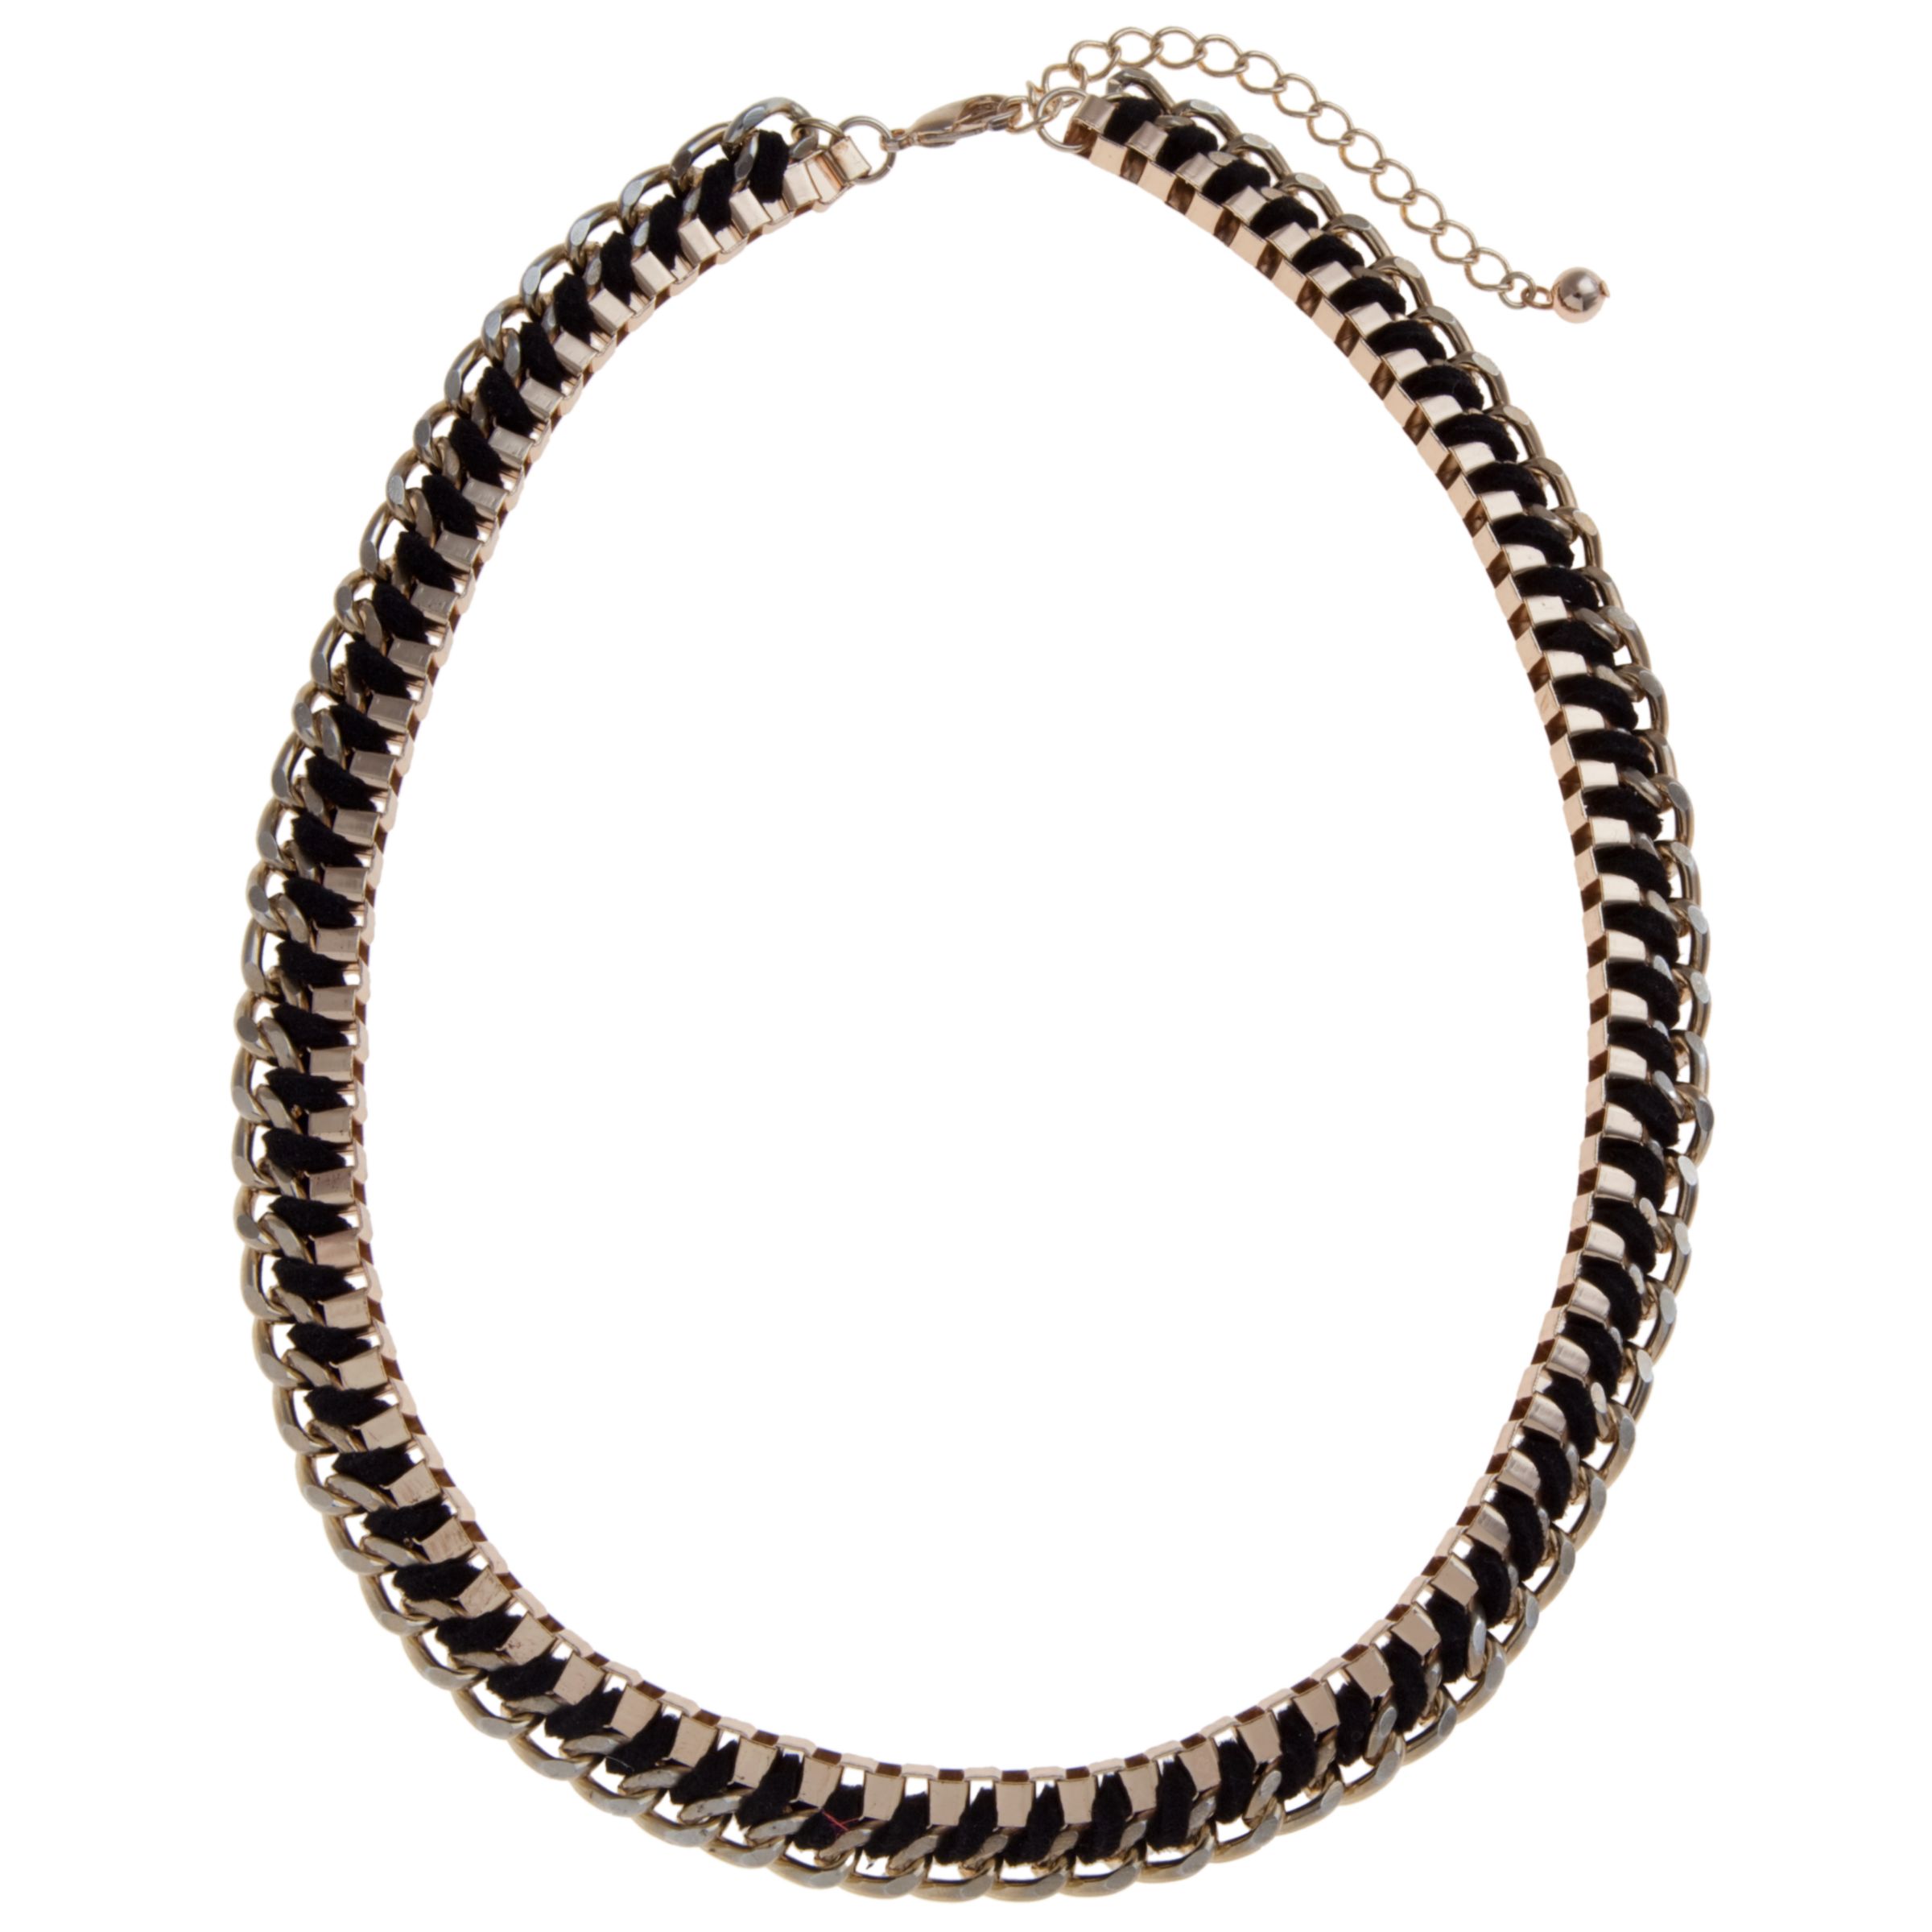 
John Lewis Cord Weave Box Chain Necklace, Black